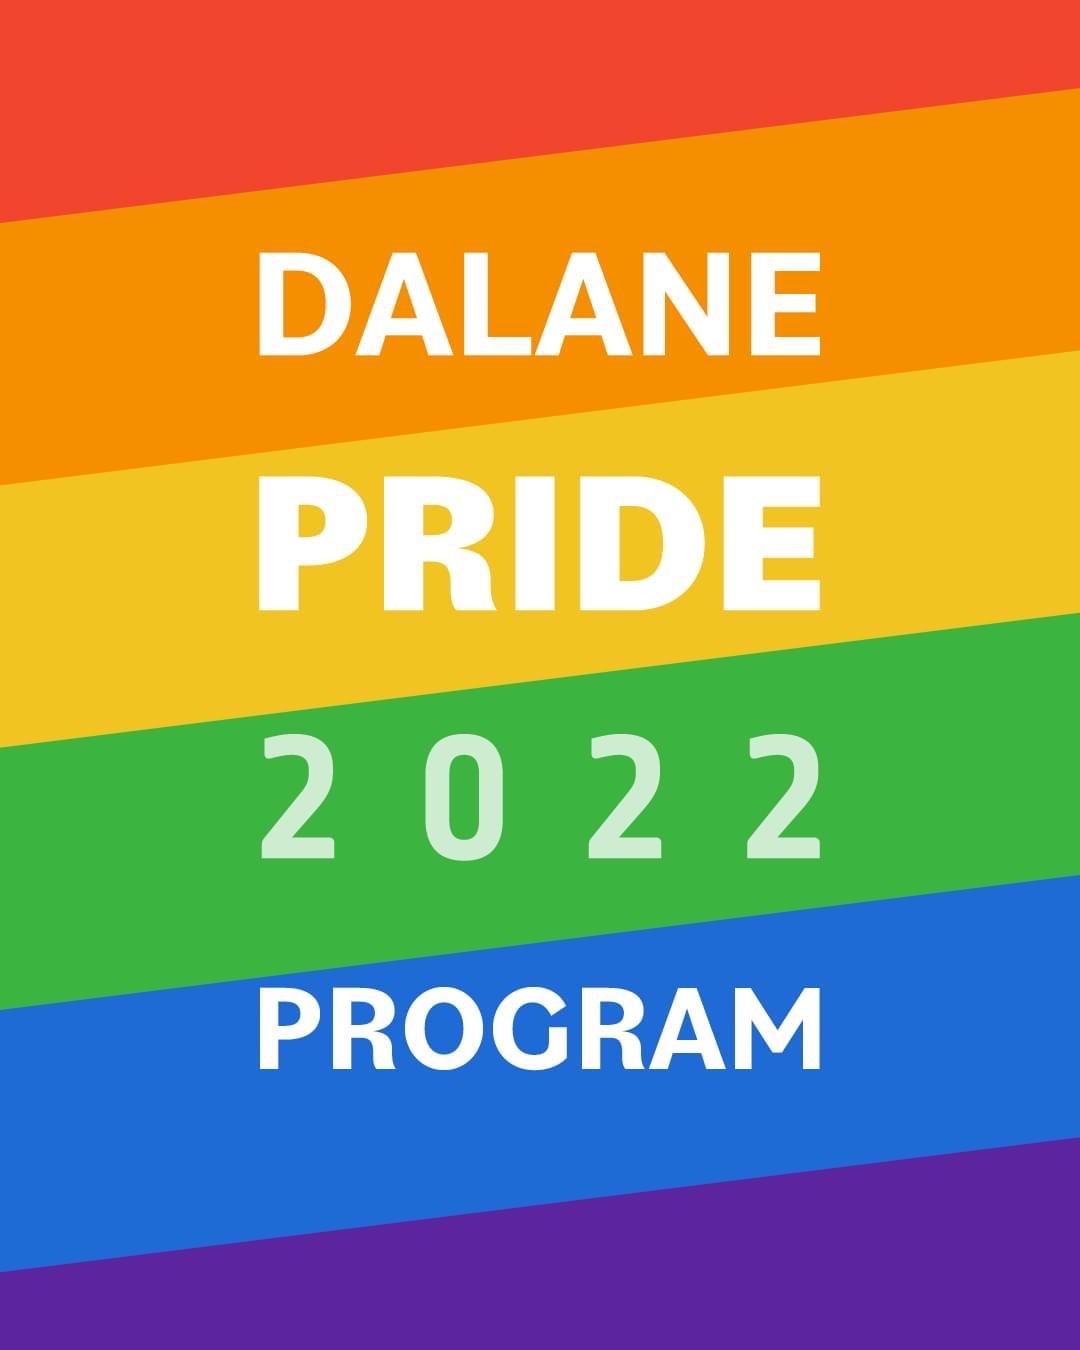 Dalane Pride 2022